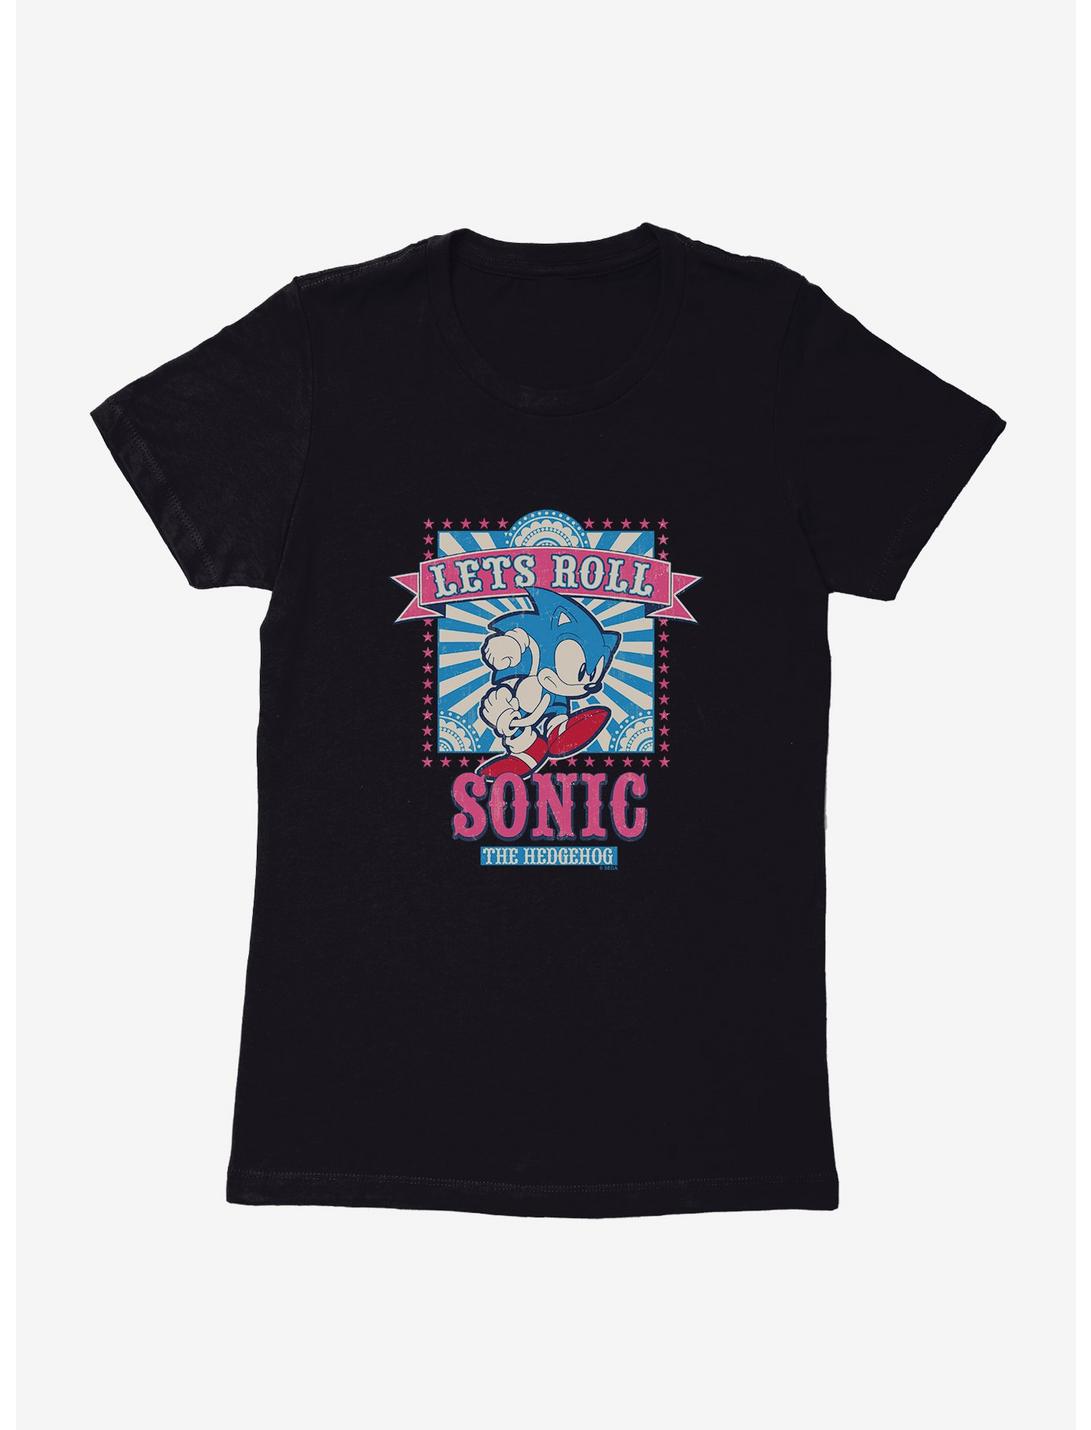 Sonic The Hedgehog Let's Roll Womens T-Shirt, BLACK, hi-res